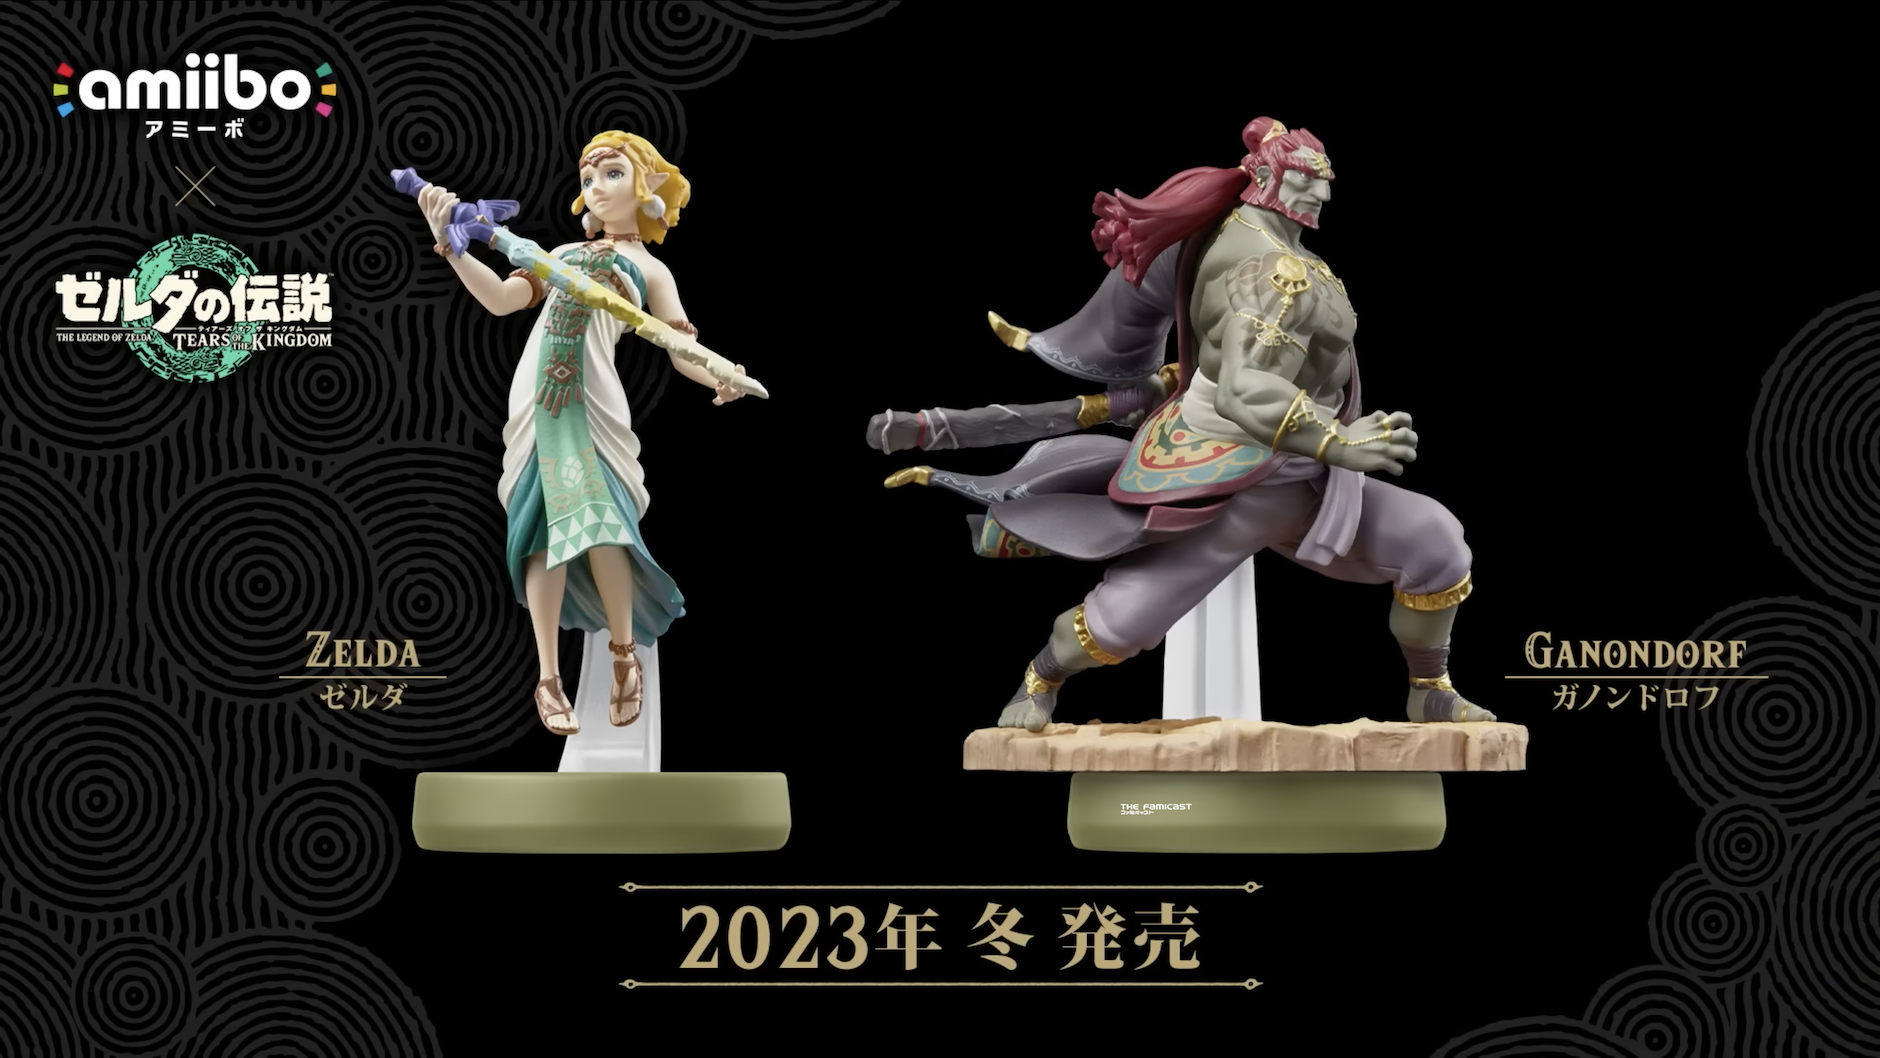 Zelda and Ganondorf Amiibo Revealed, Up for Pre-order